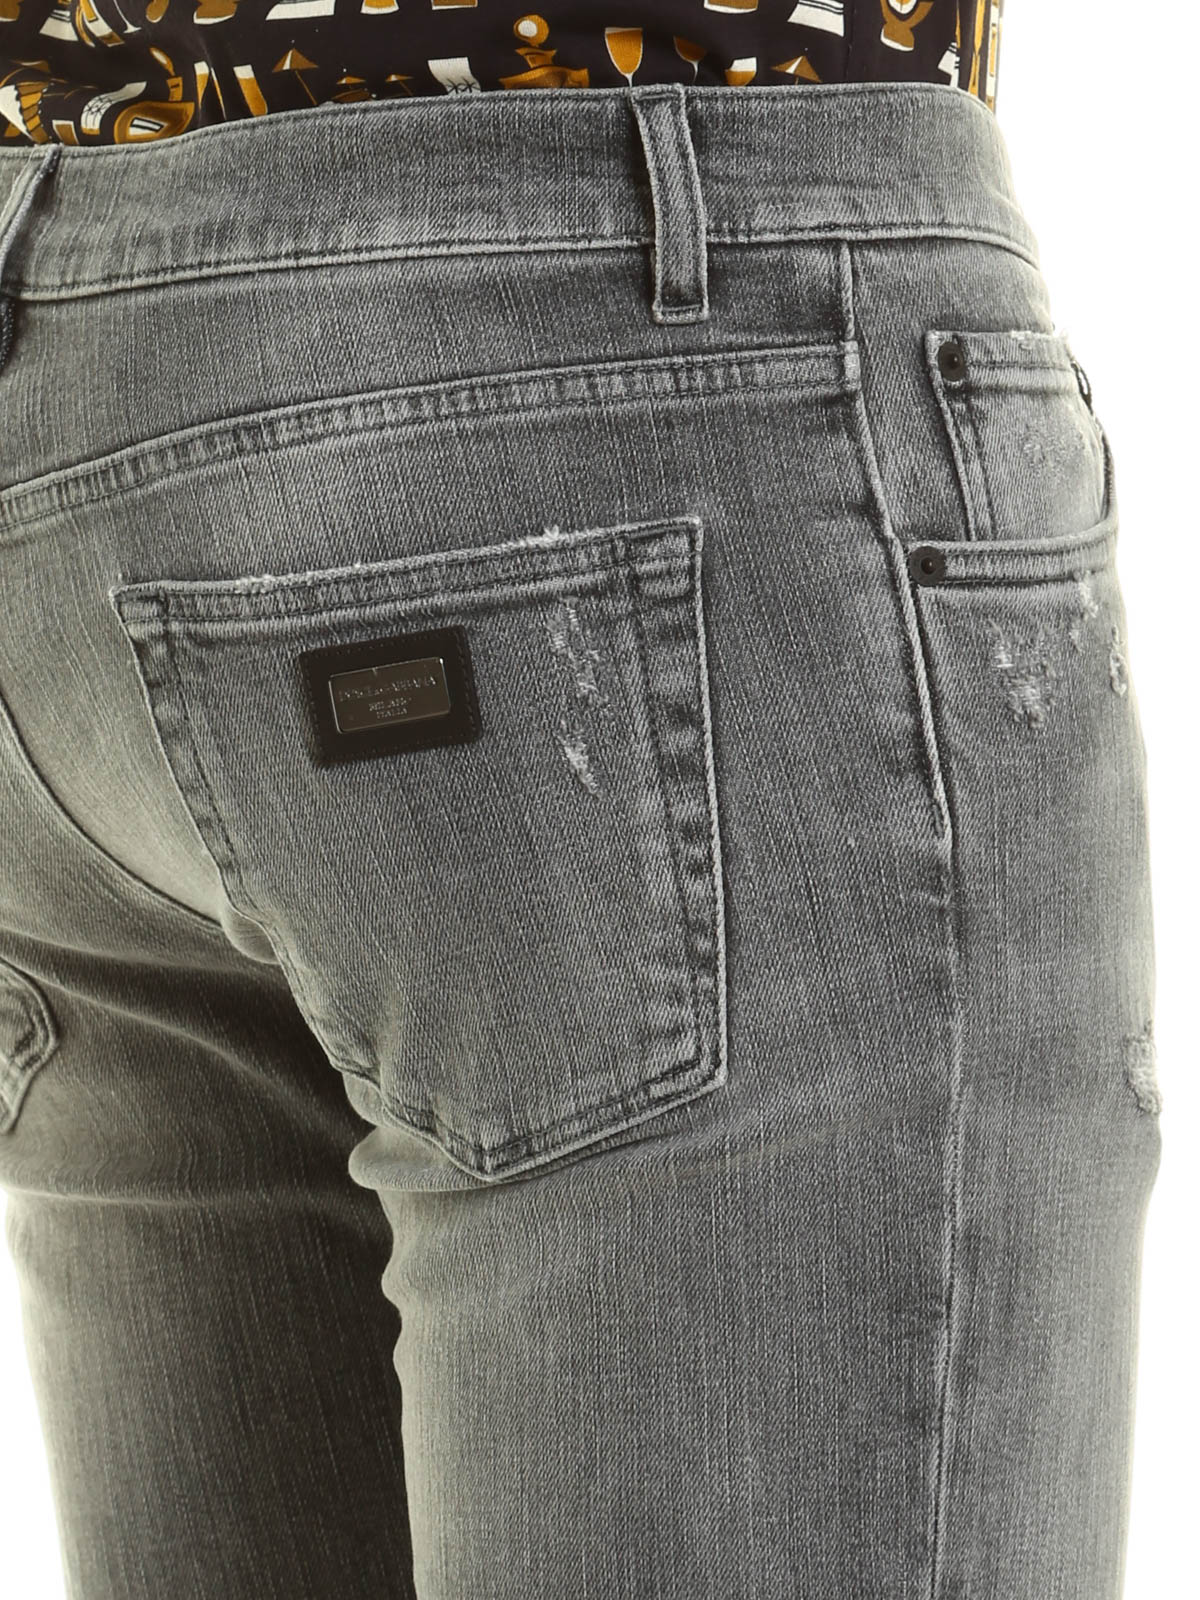 Straight leg jeans Dolce & Gabbana - Fake scraping denim jeans -  G6XOLDG8U55S9001